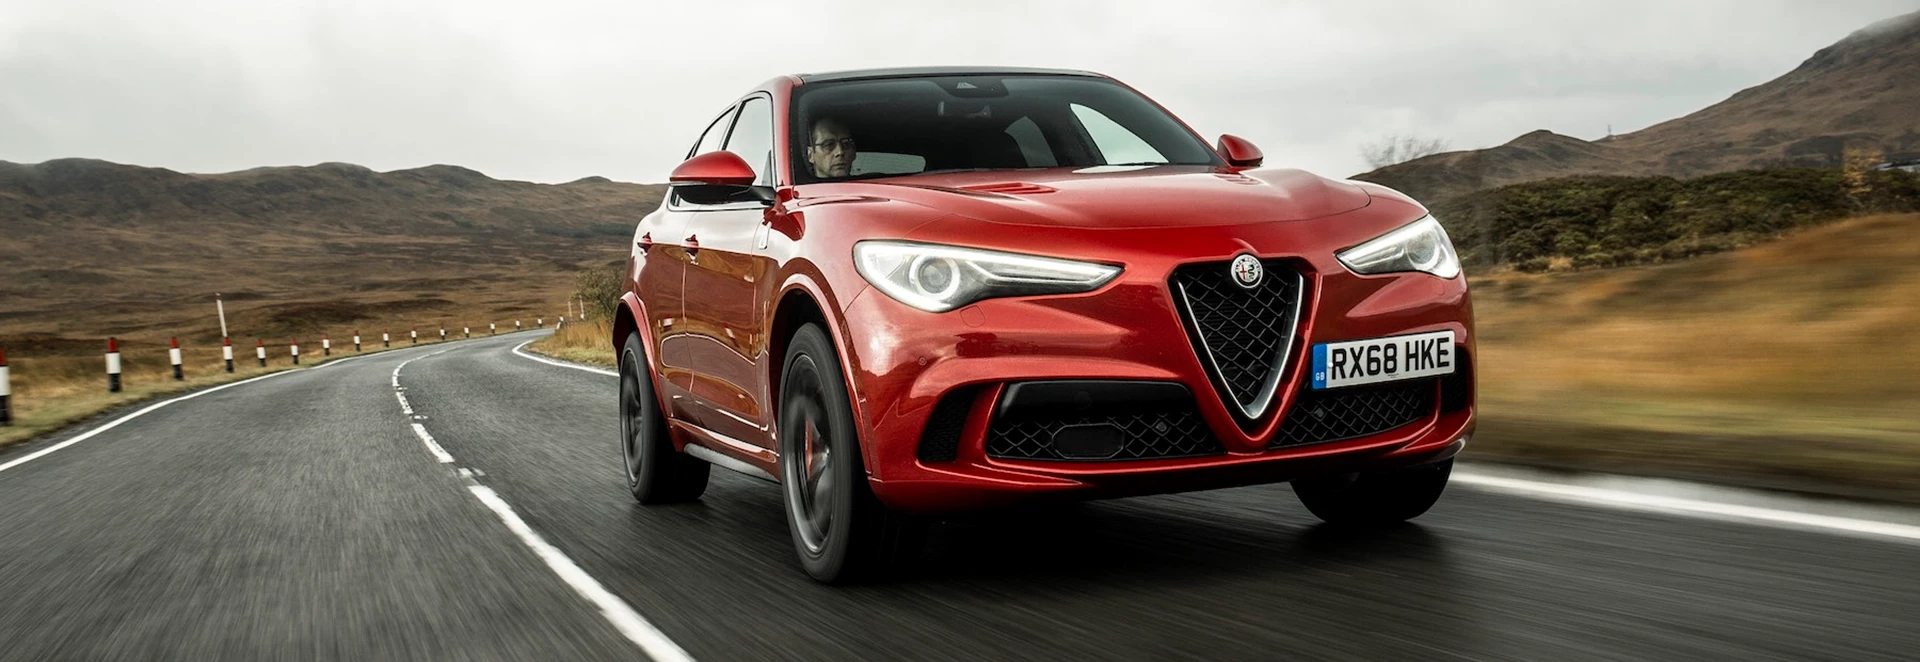 Alfa Romeo Stelvio Quadrifoglio 2019 Review